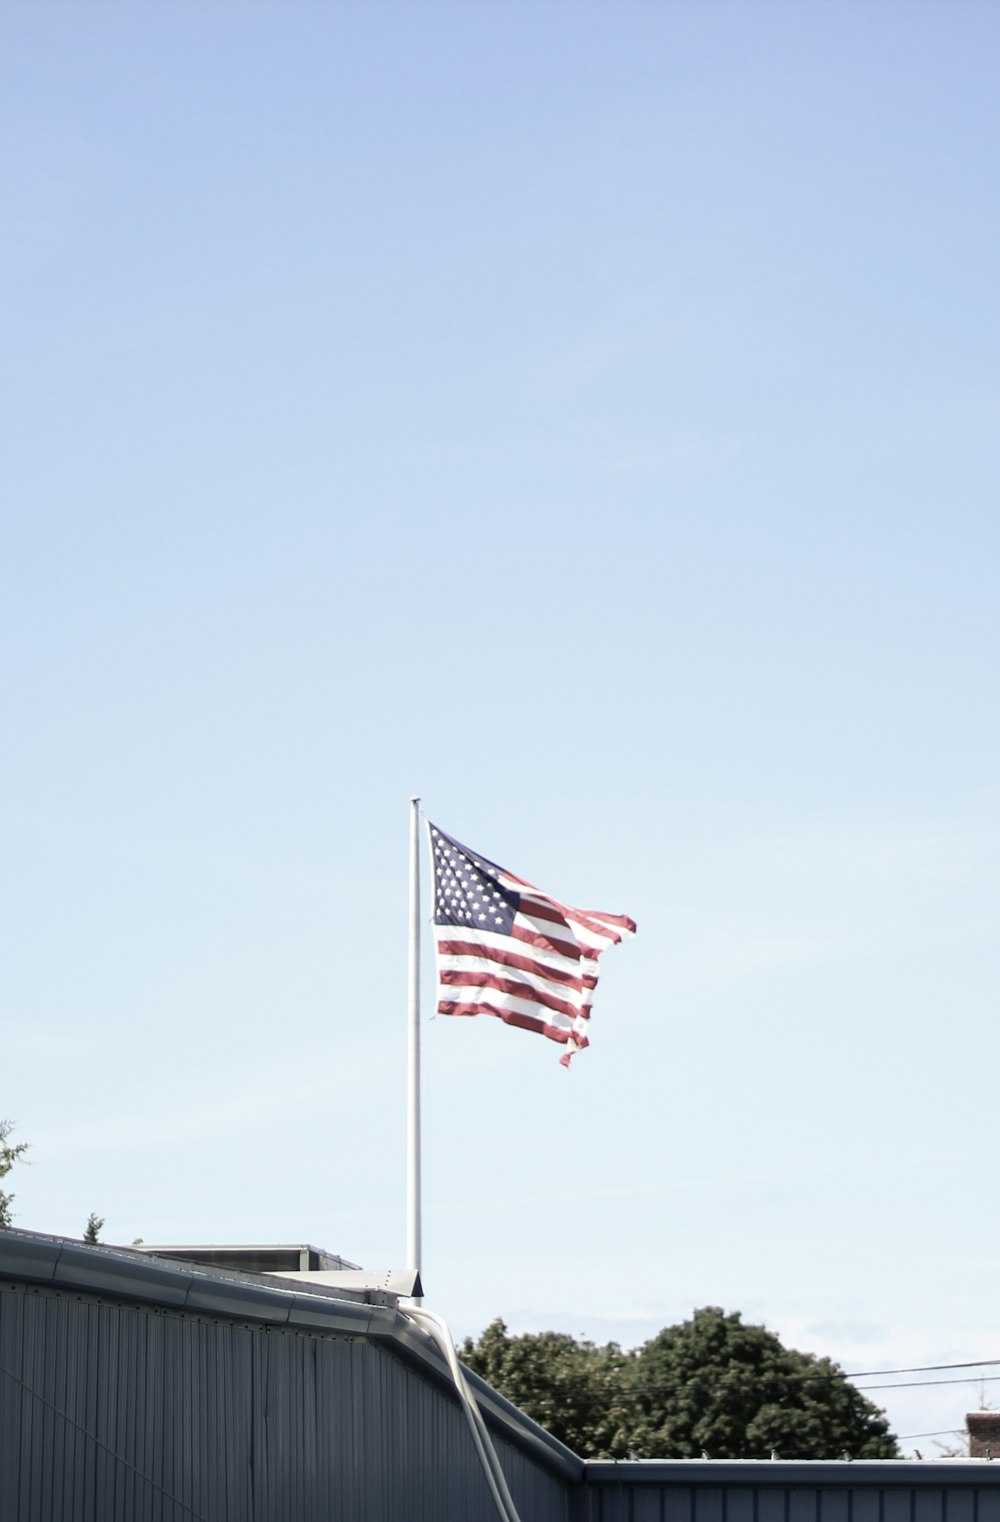 us flag on pole during daytime